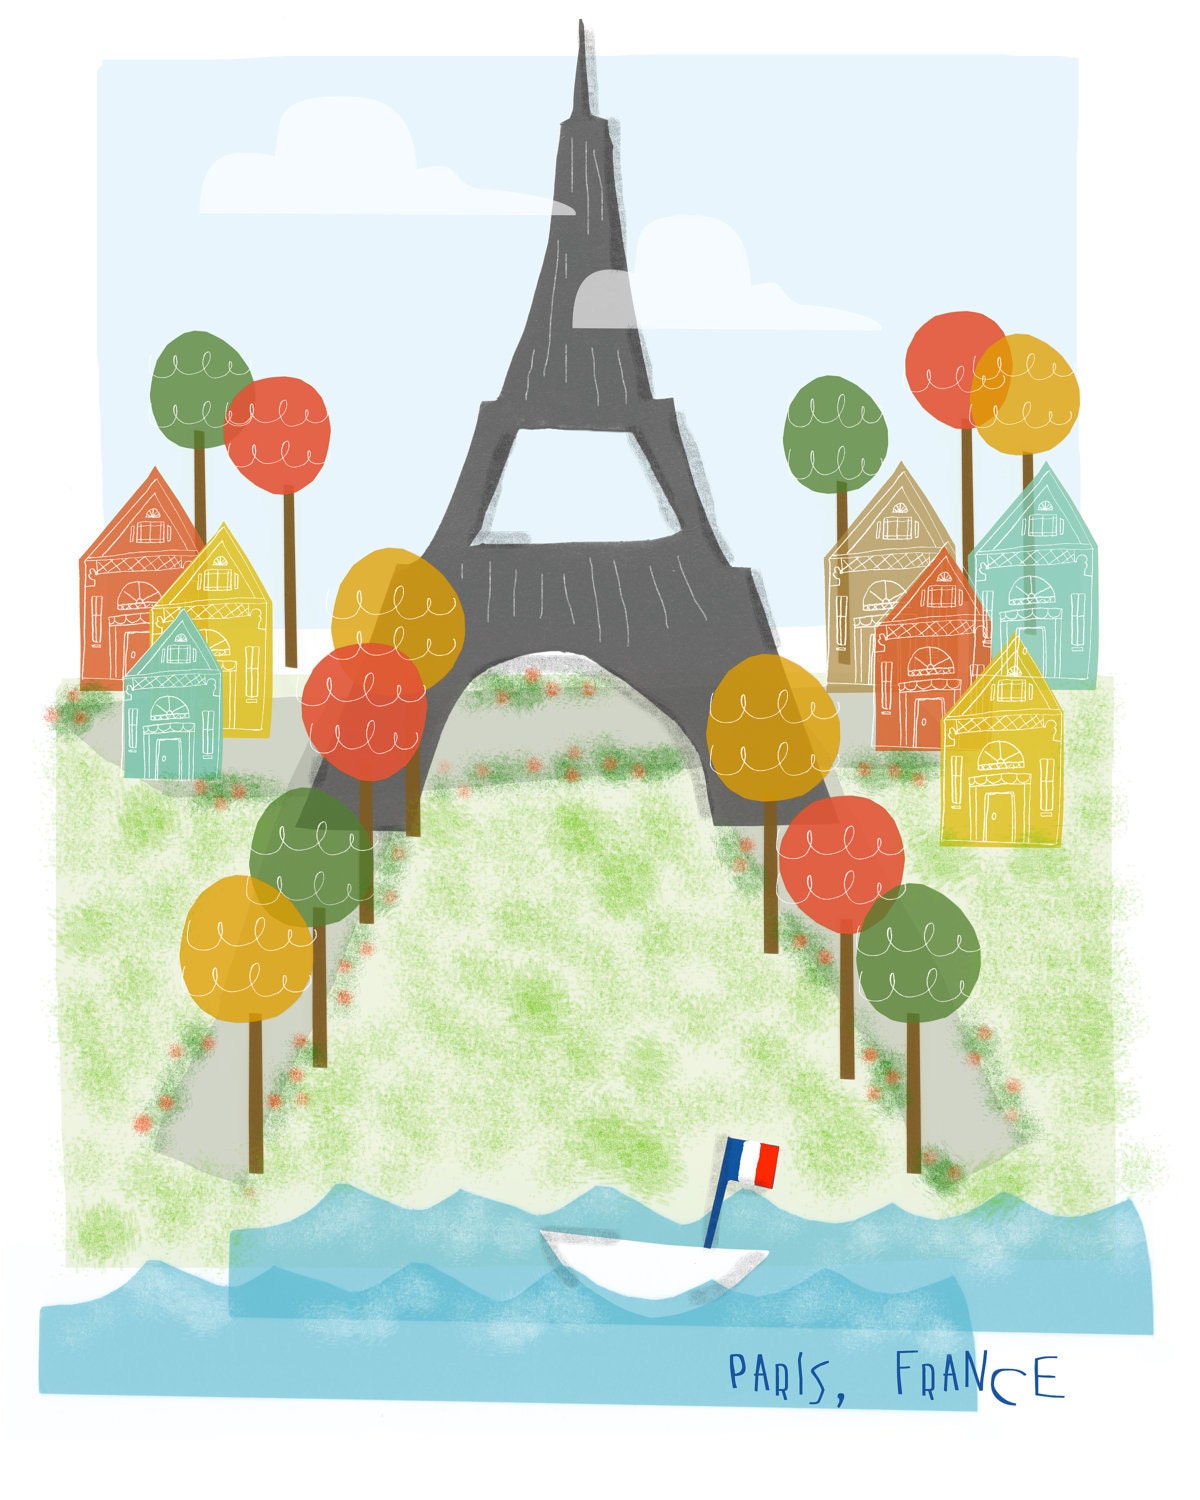 Paris France art print - 8x10 - Eiffel Tower Paris city poster illustration wall decor